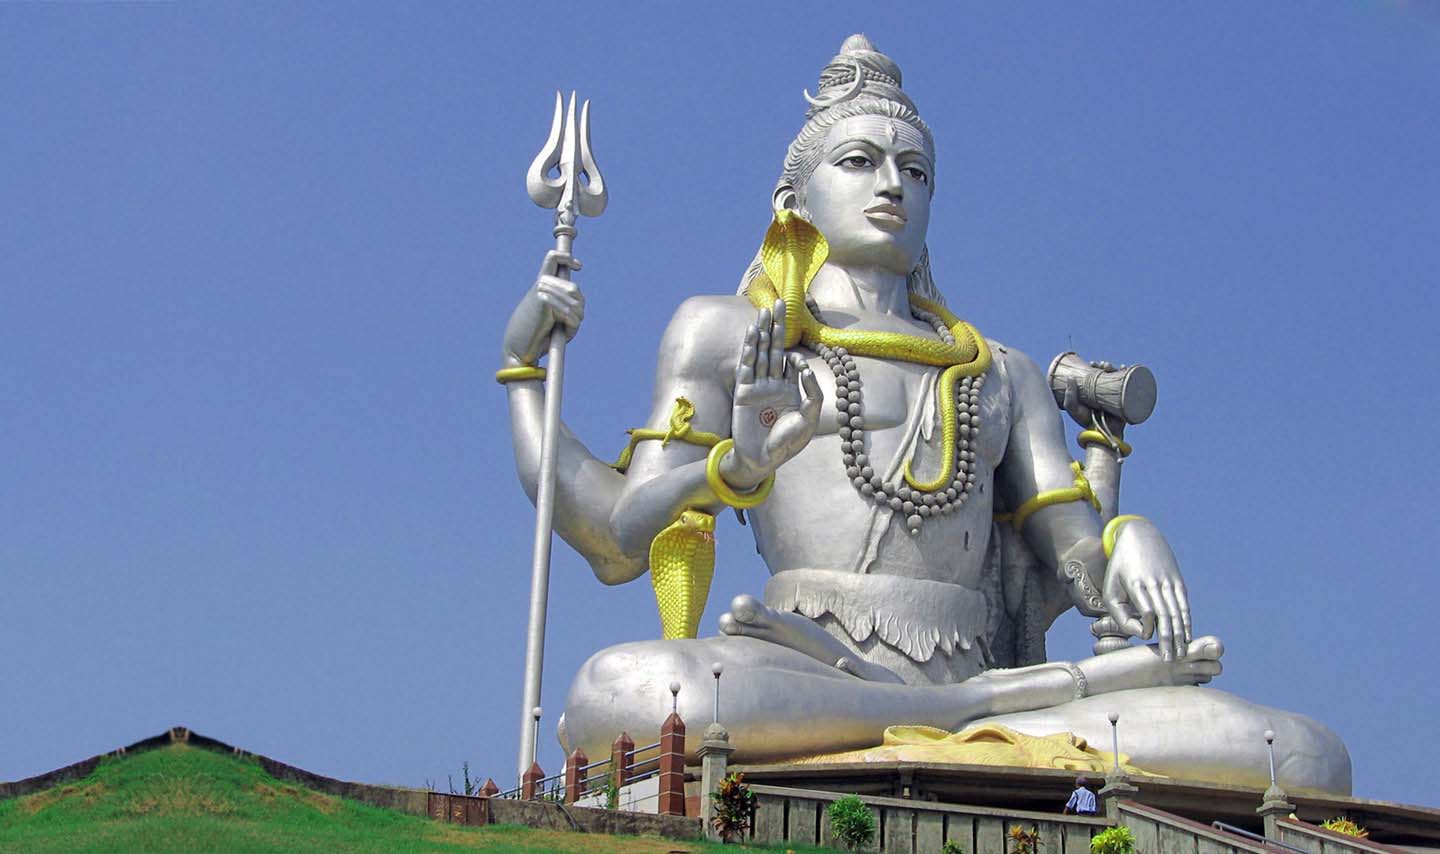 https://blogger.googleusercontent.com/img/b/R29vZ2xl/AVvXsEjGyt55X1VjWIfO1dmYKP8QOT8ZJ7kWJEHb4216SVcsLO5uJ6heugqLsX6360PLX7DbJGQpevcrOZf9EJRzbmGYACnKY922jKmfW4iEYcAkbC7sXsR7eo5HqJTCjqbTk5LqRChewgcBSluq/s1600/Hindu+God+Shiva+Wallpapers.jpg